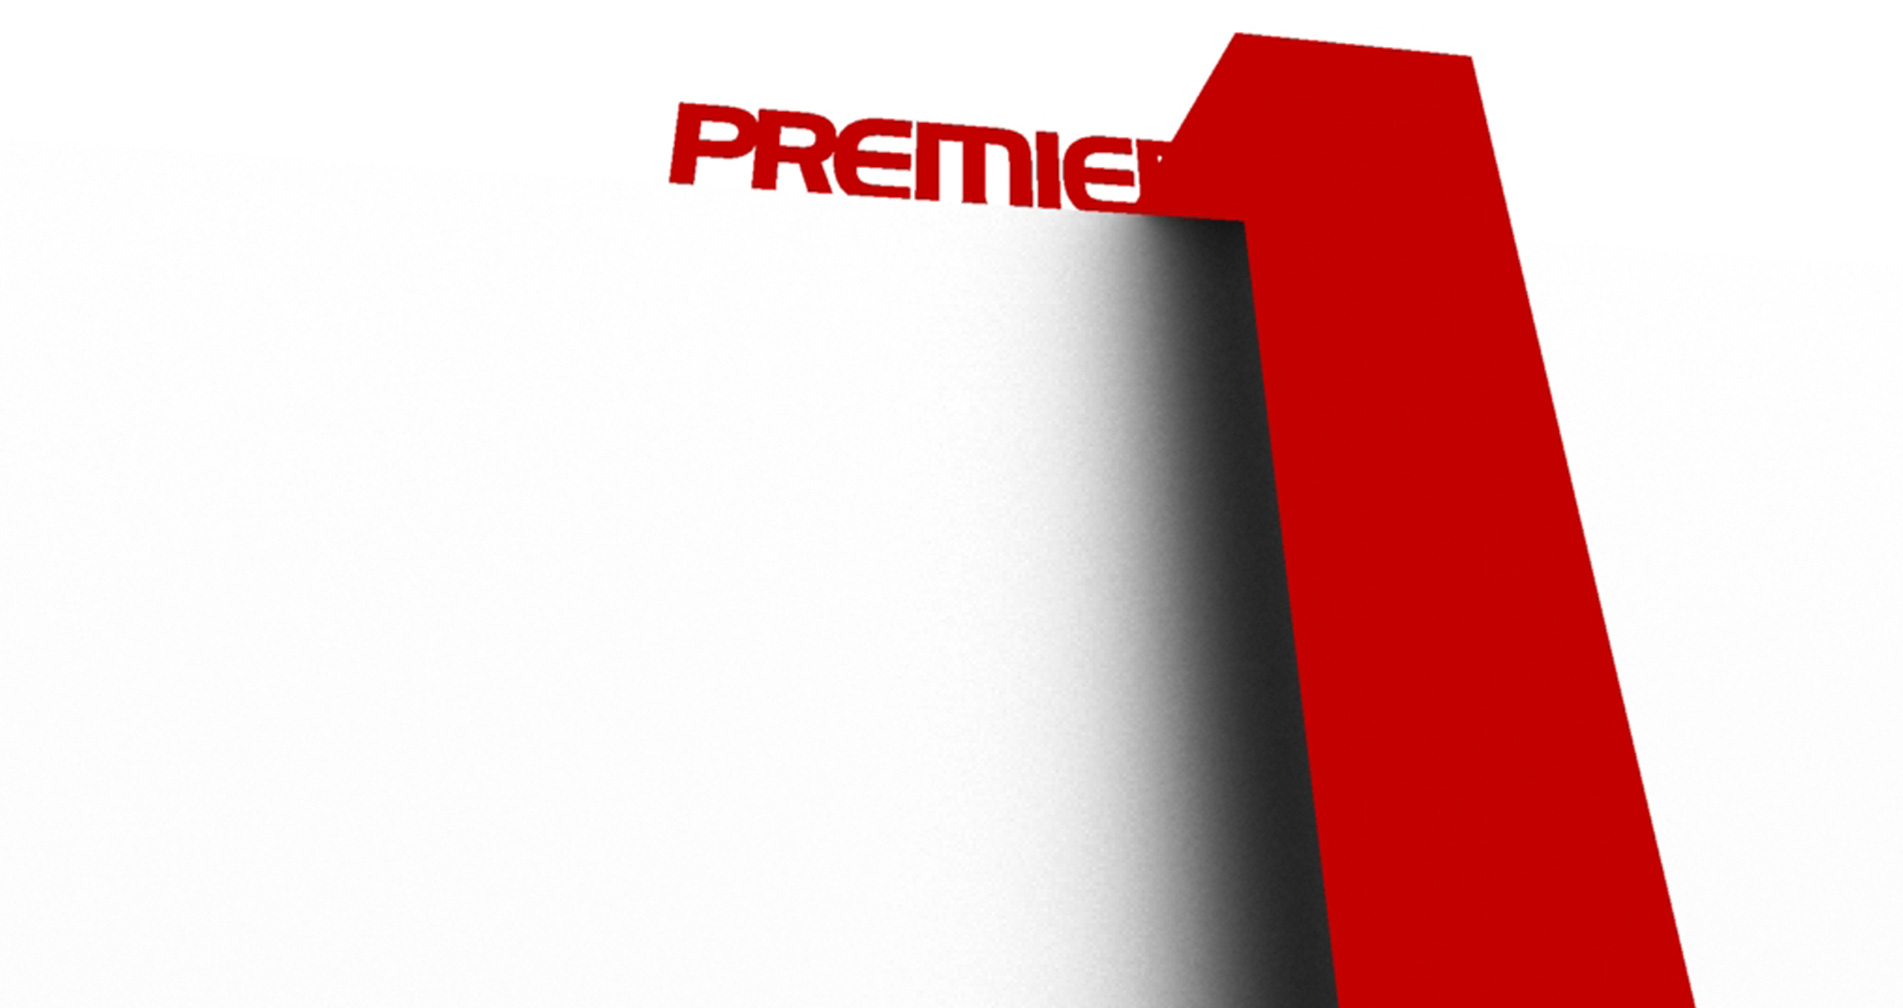 Premiere branding